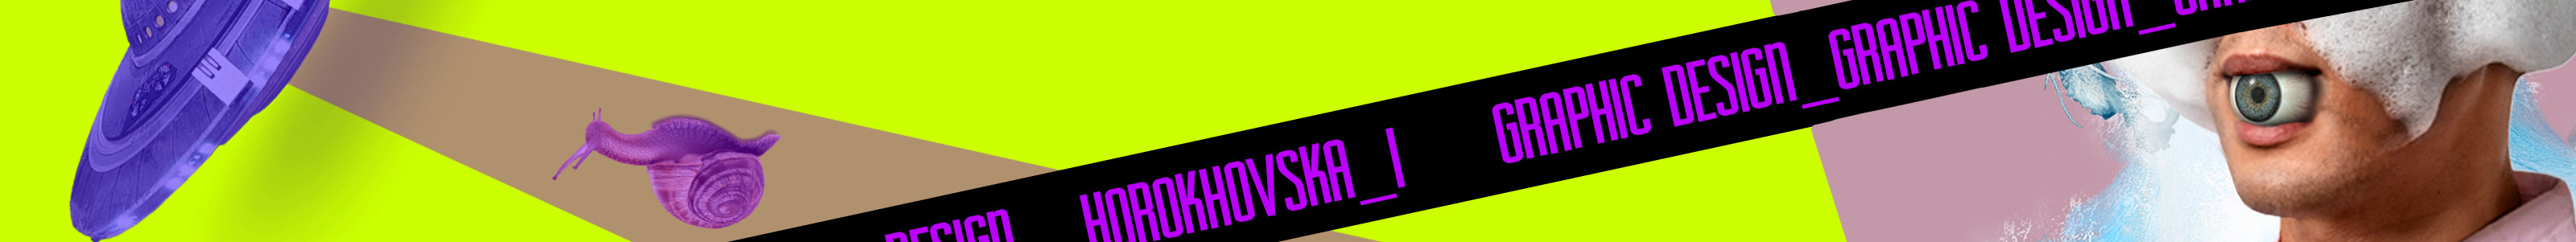 Ira Horokhovska profil başlığı